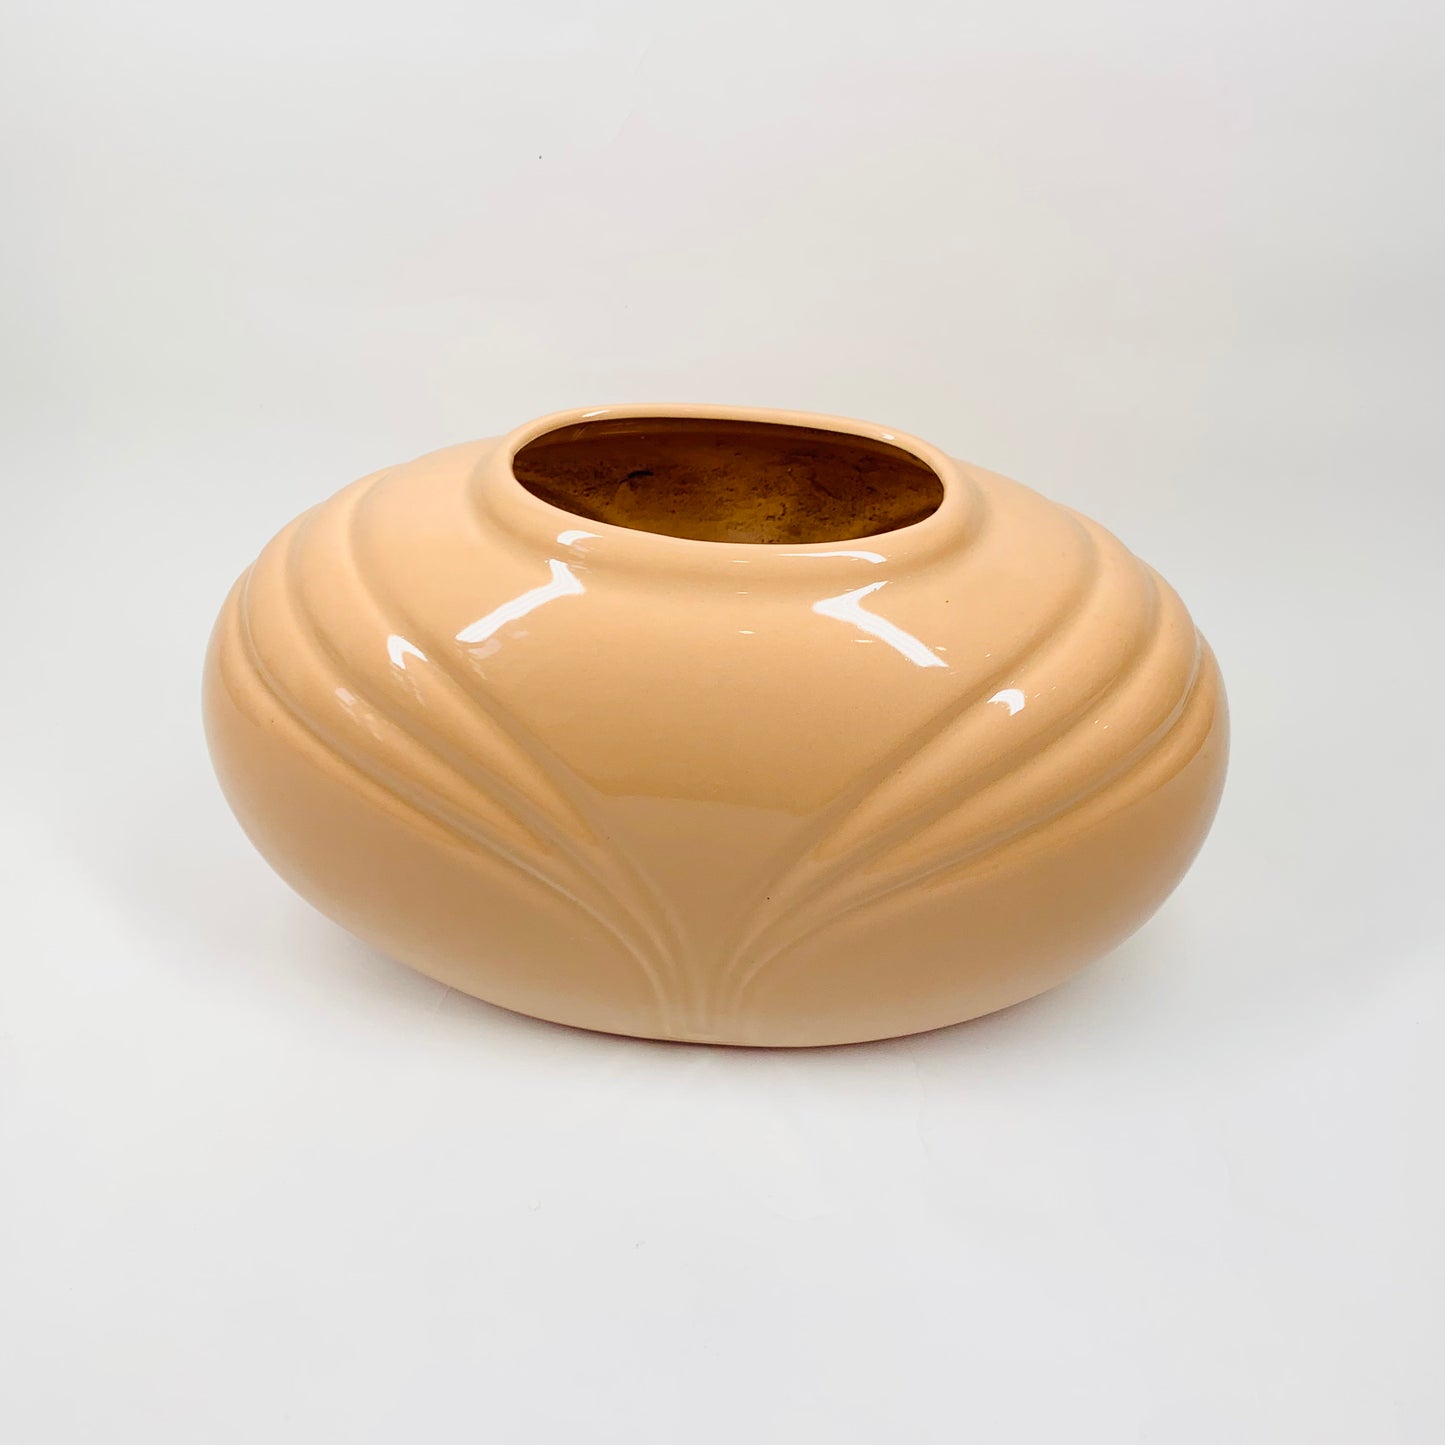 Large 1980s Japanese Art Deco revival nude porcelain vase